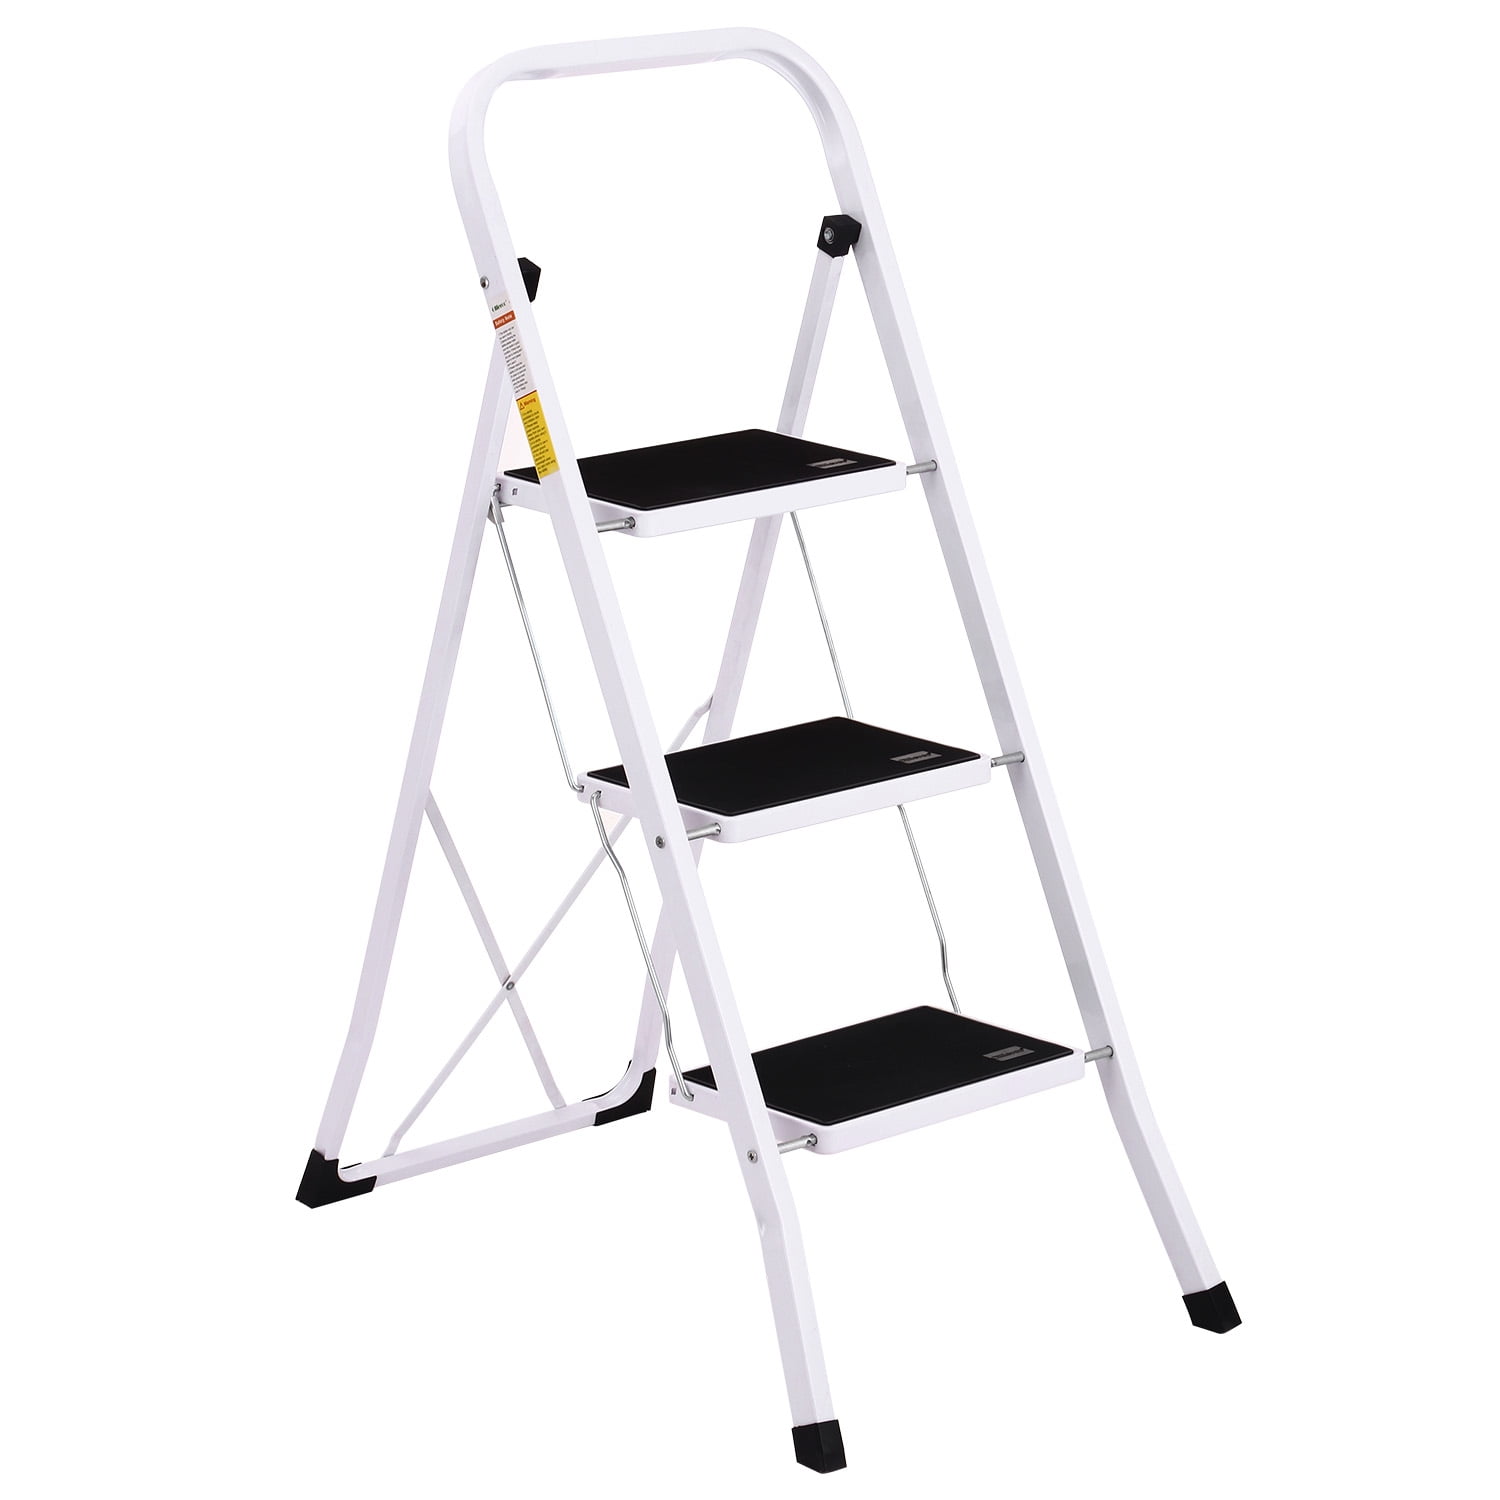 Portable 2 Step Ladder Folding Step Stool Steel Anti-Slip 330lbs Max Load White 